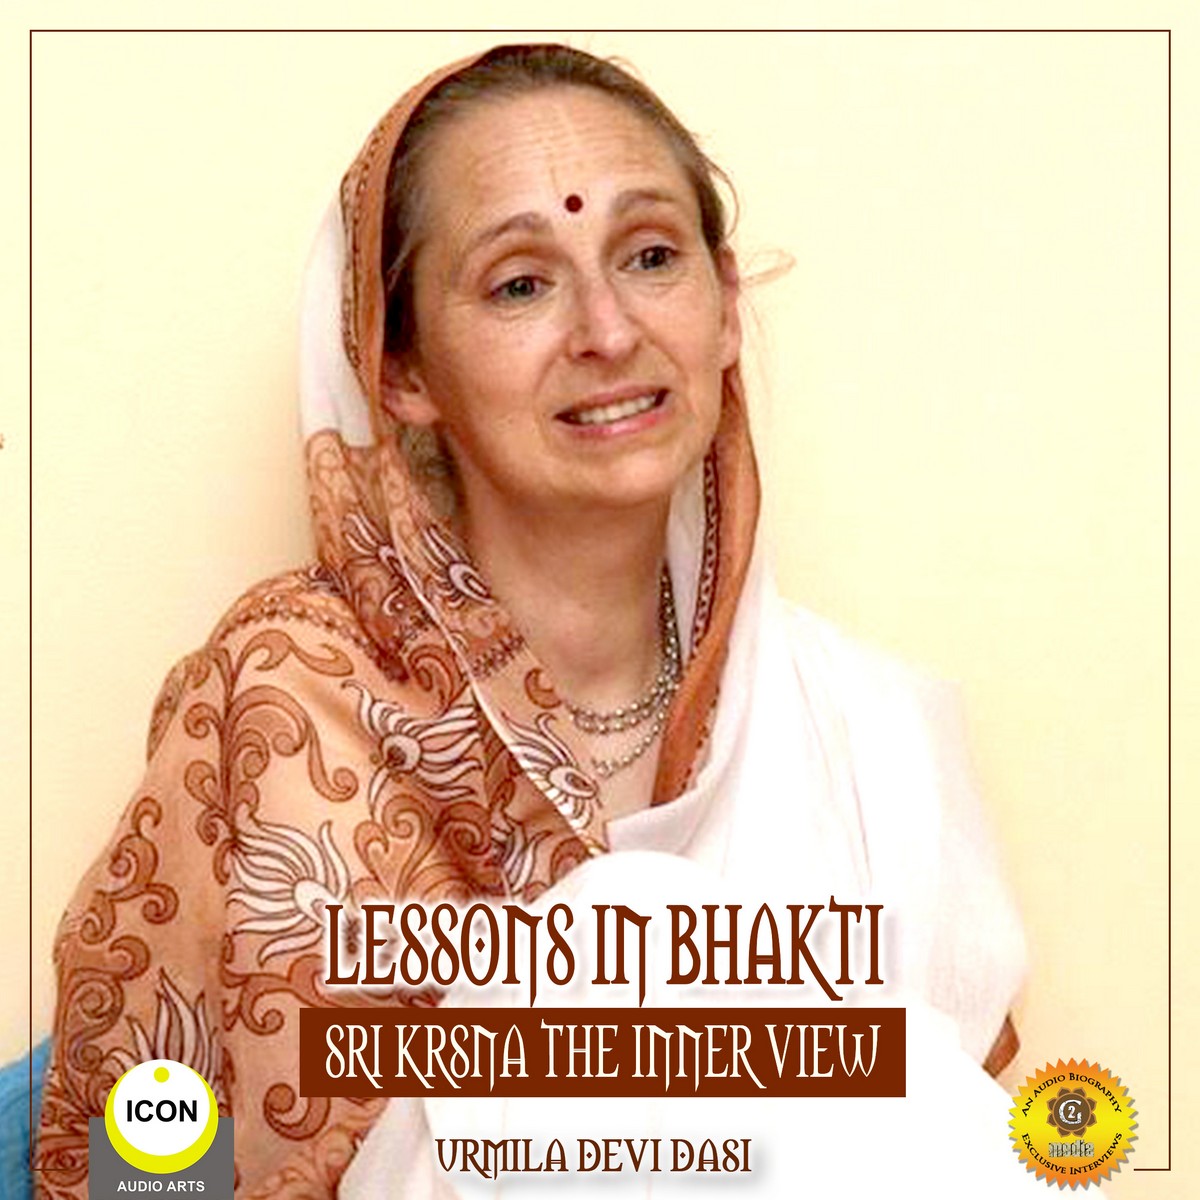 Lessons in Bhakti Sri Krsna the Inner View – Urmila Devi Dasi